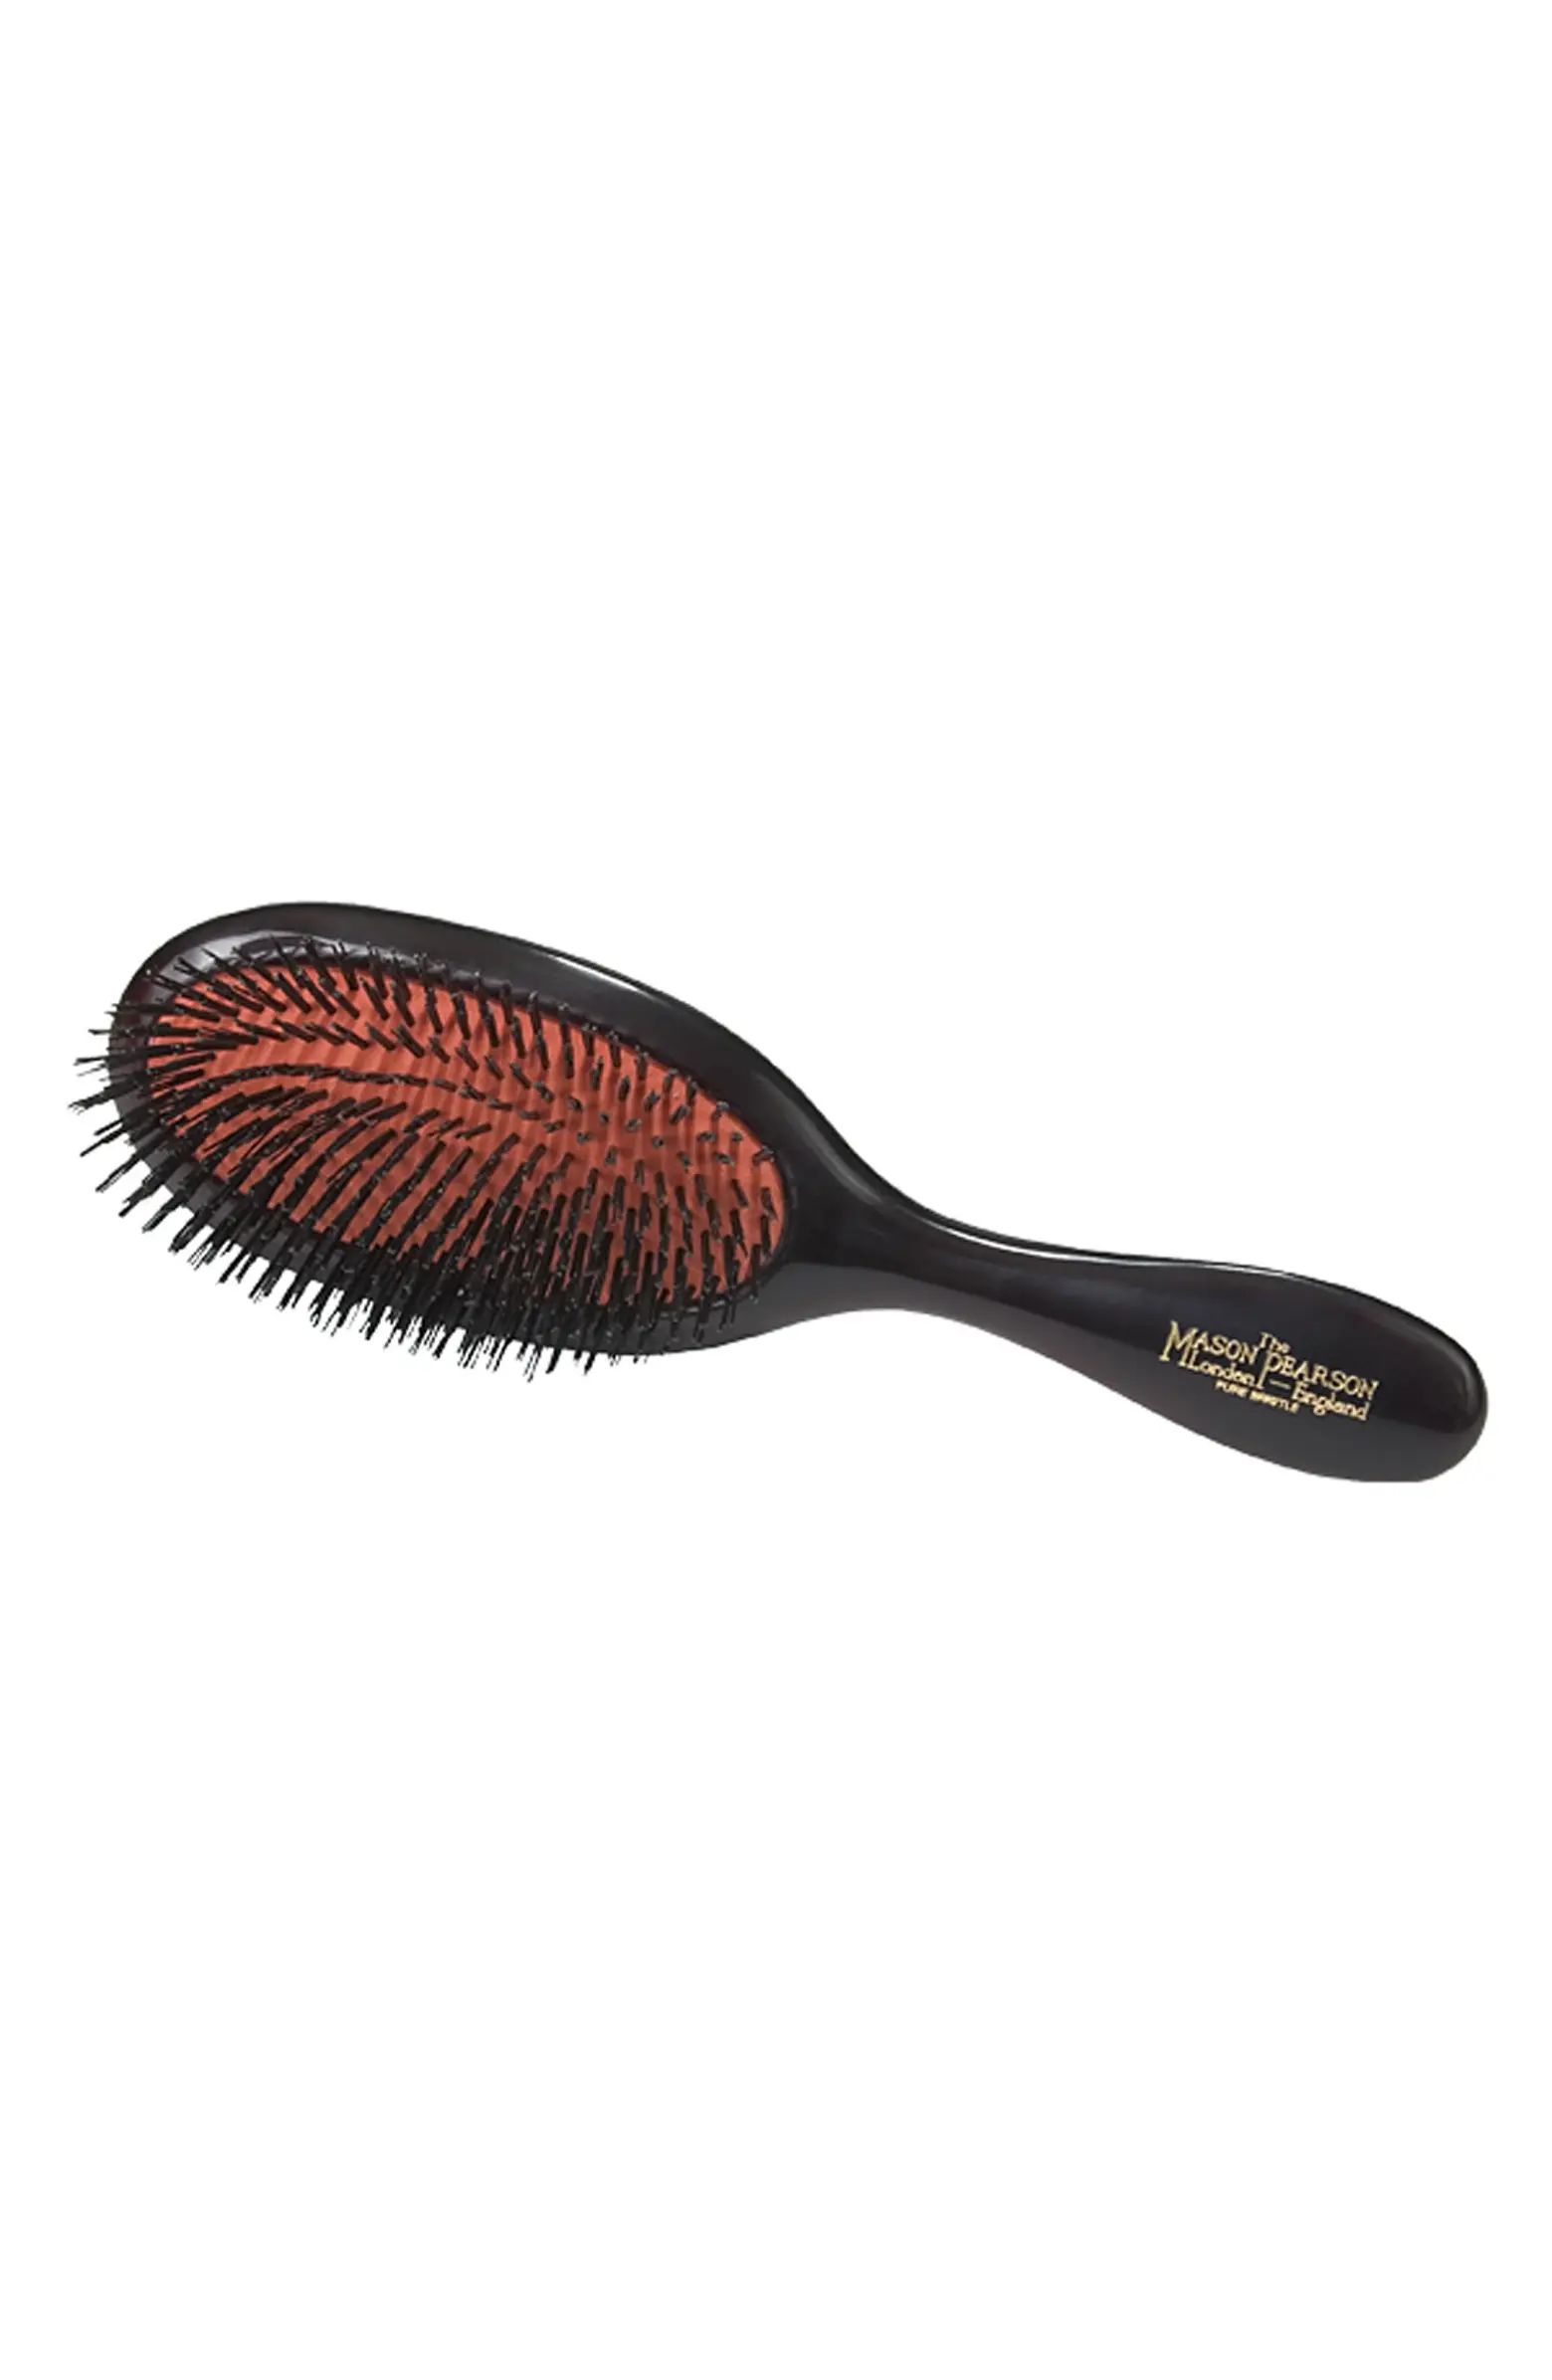 Handy Bristle Hair Brush for Medium Length Hair | Nordstrom